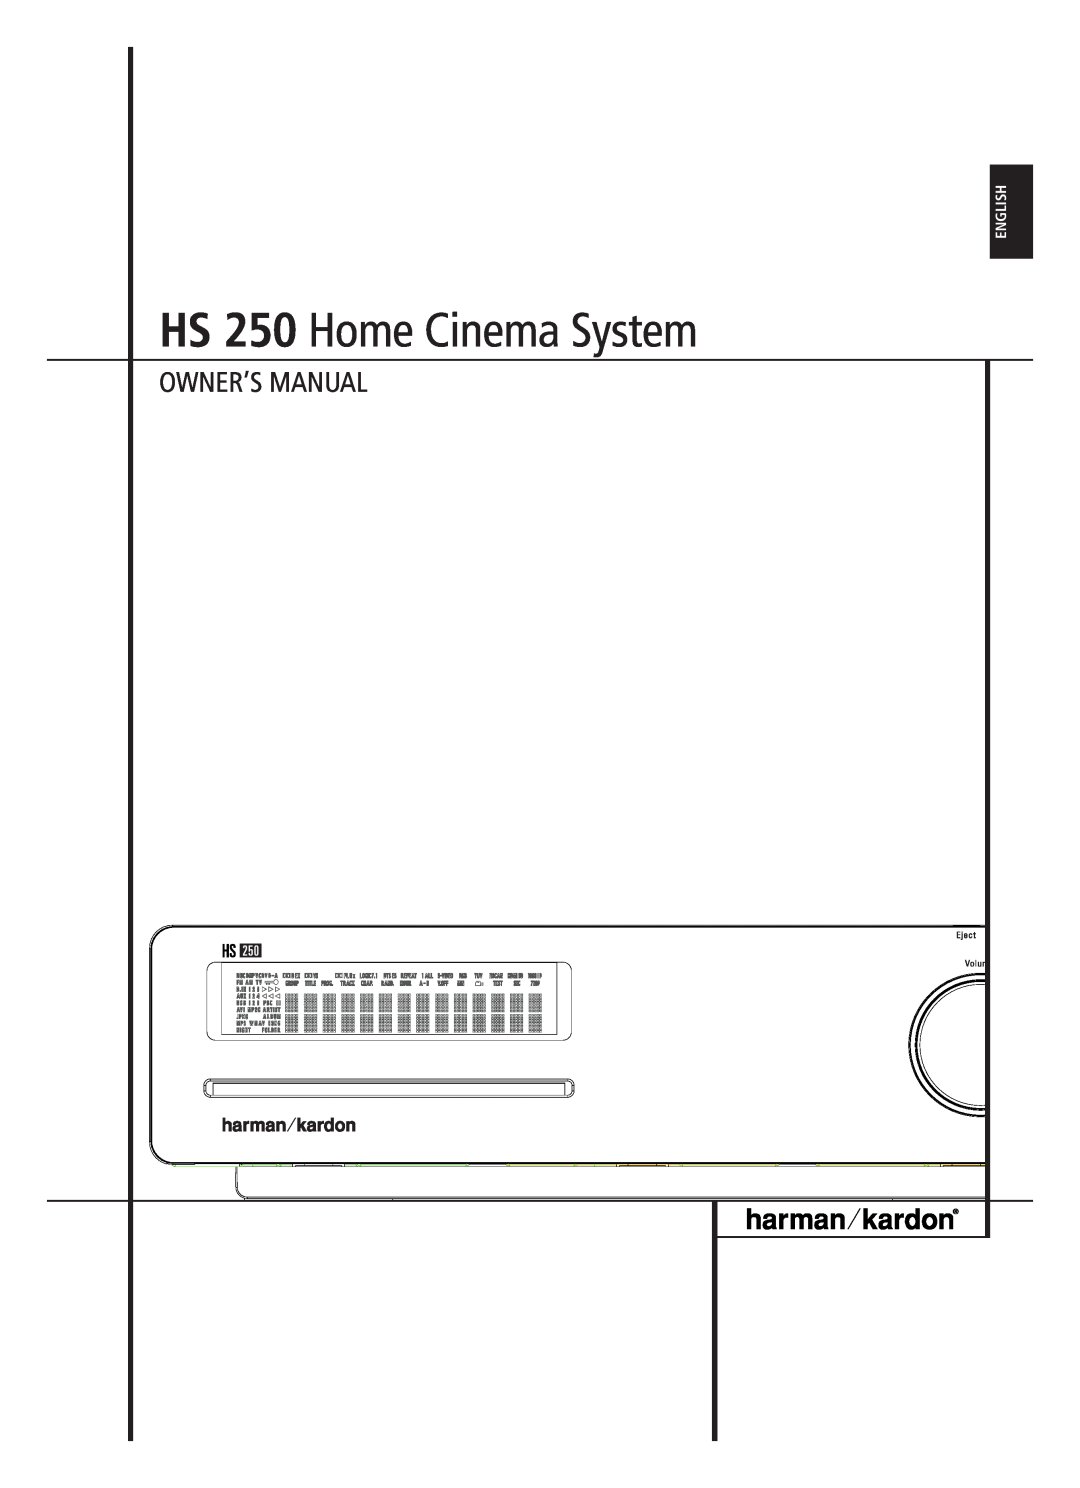 Harman-Kardon owner manual HS 250 Home Cinema System, English 